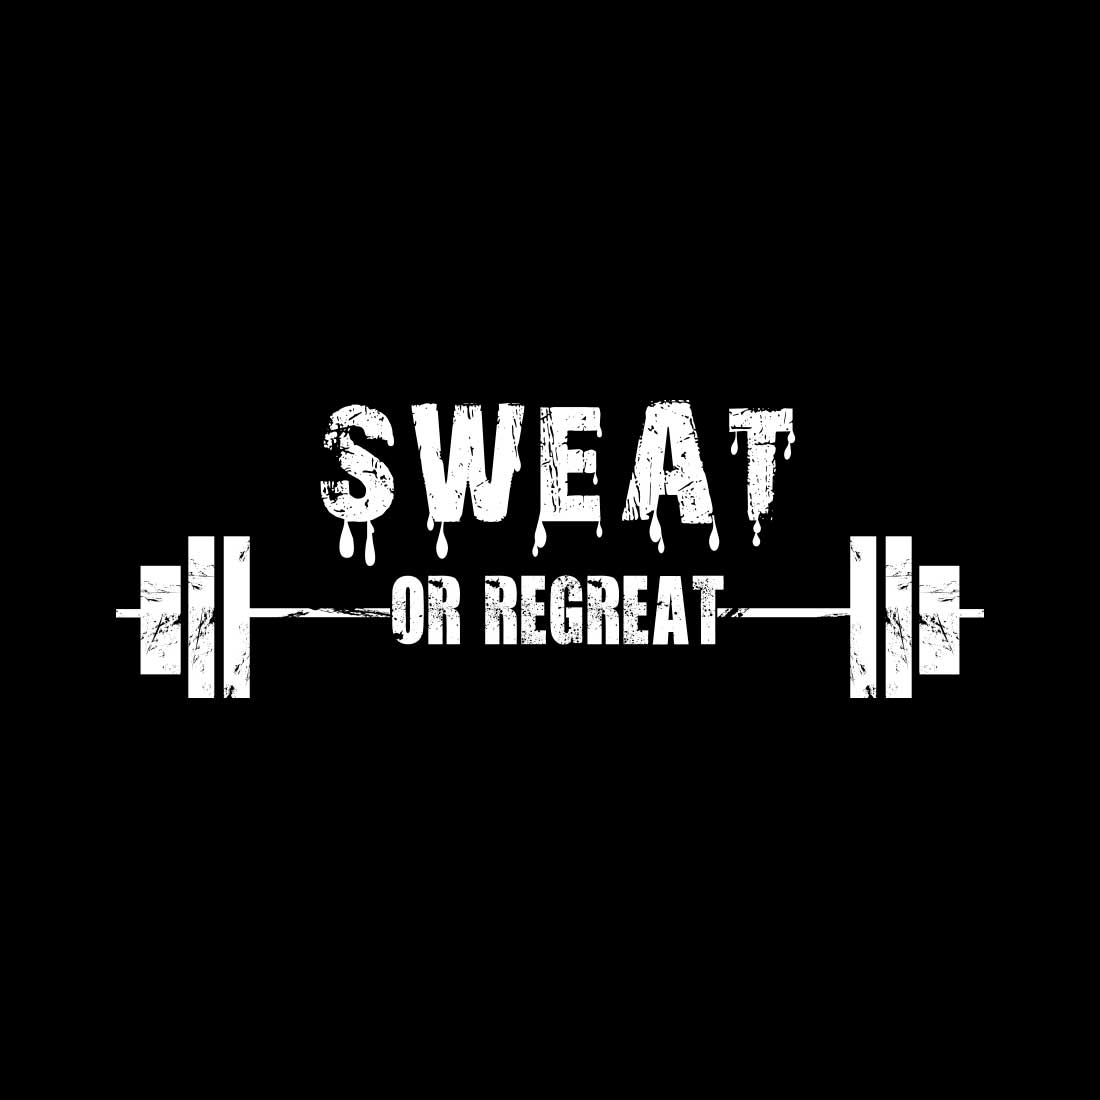 Sweat Or Regret Black Men T-Shirt